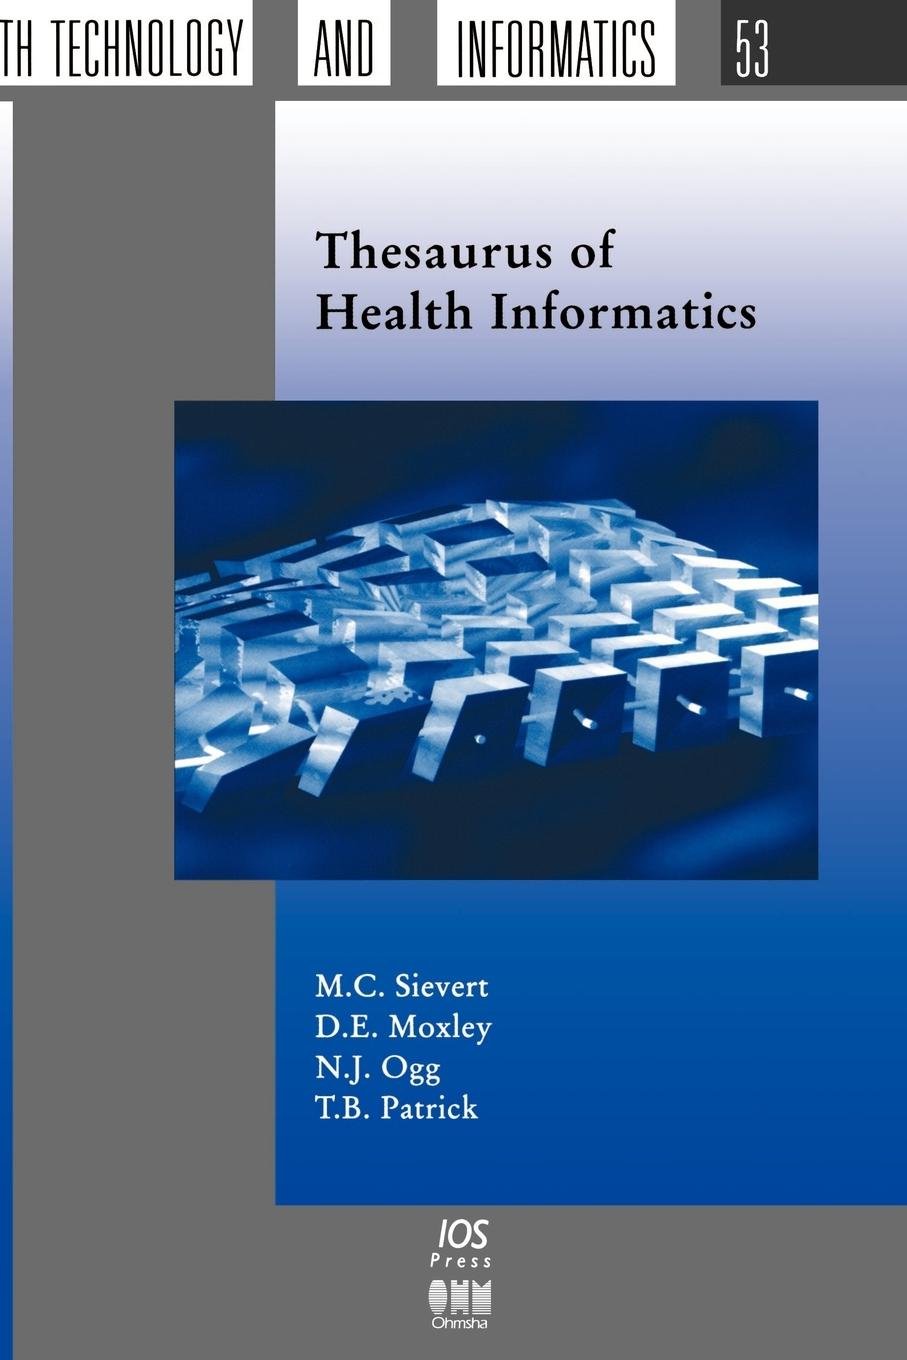 Thesaurus of Health Informatics - Sievert, M. C. Ogg, N. J. Moxley, D. E.